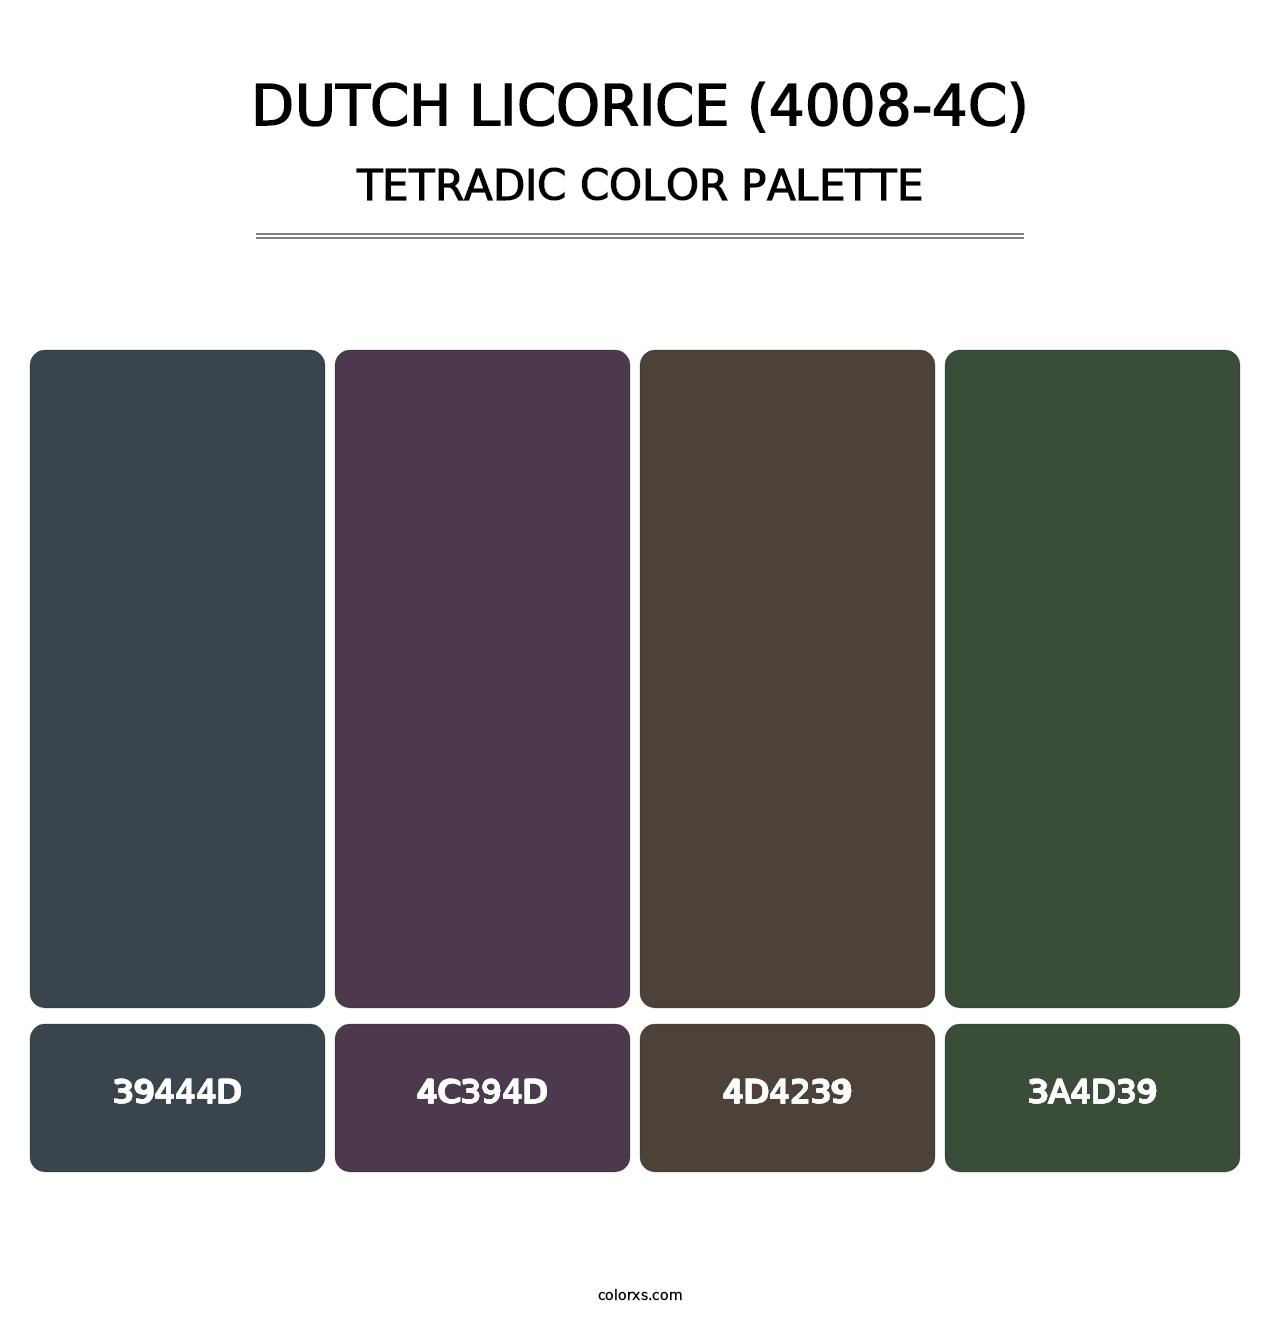 Dutch Licorice (4008-4C) - Tetradic Color Palette